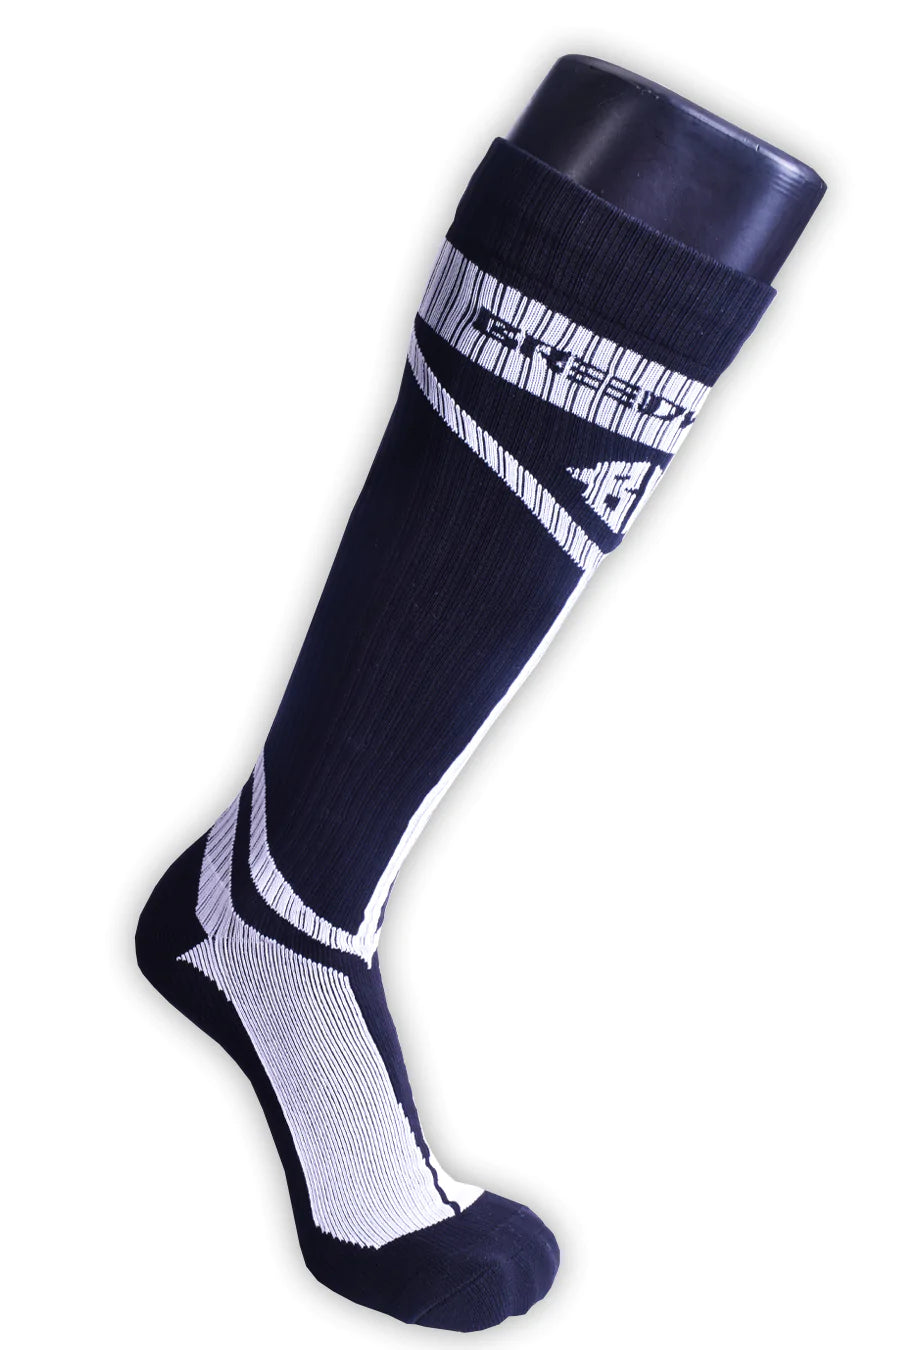 A mannequin leg wearing a black Hybred Sock.